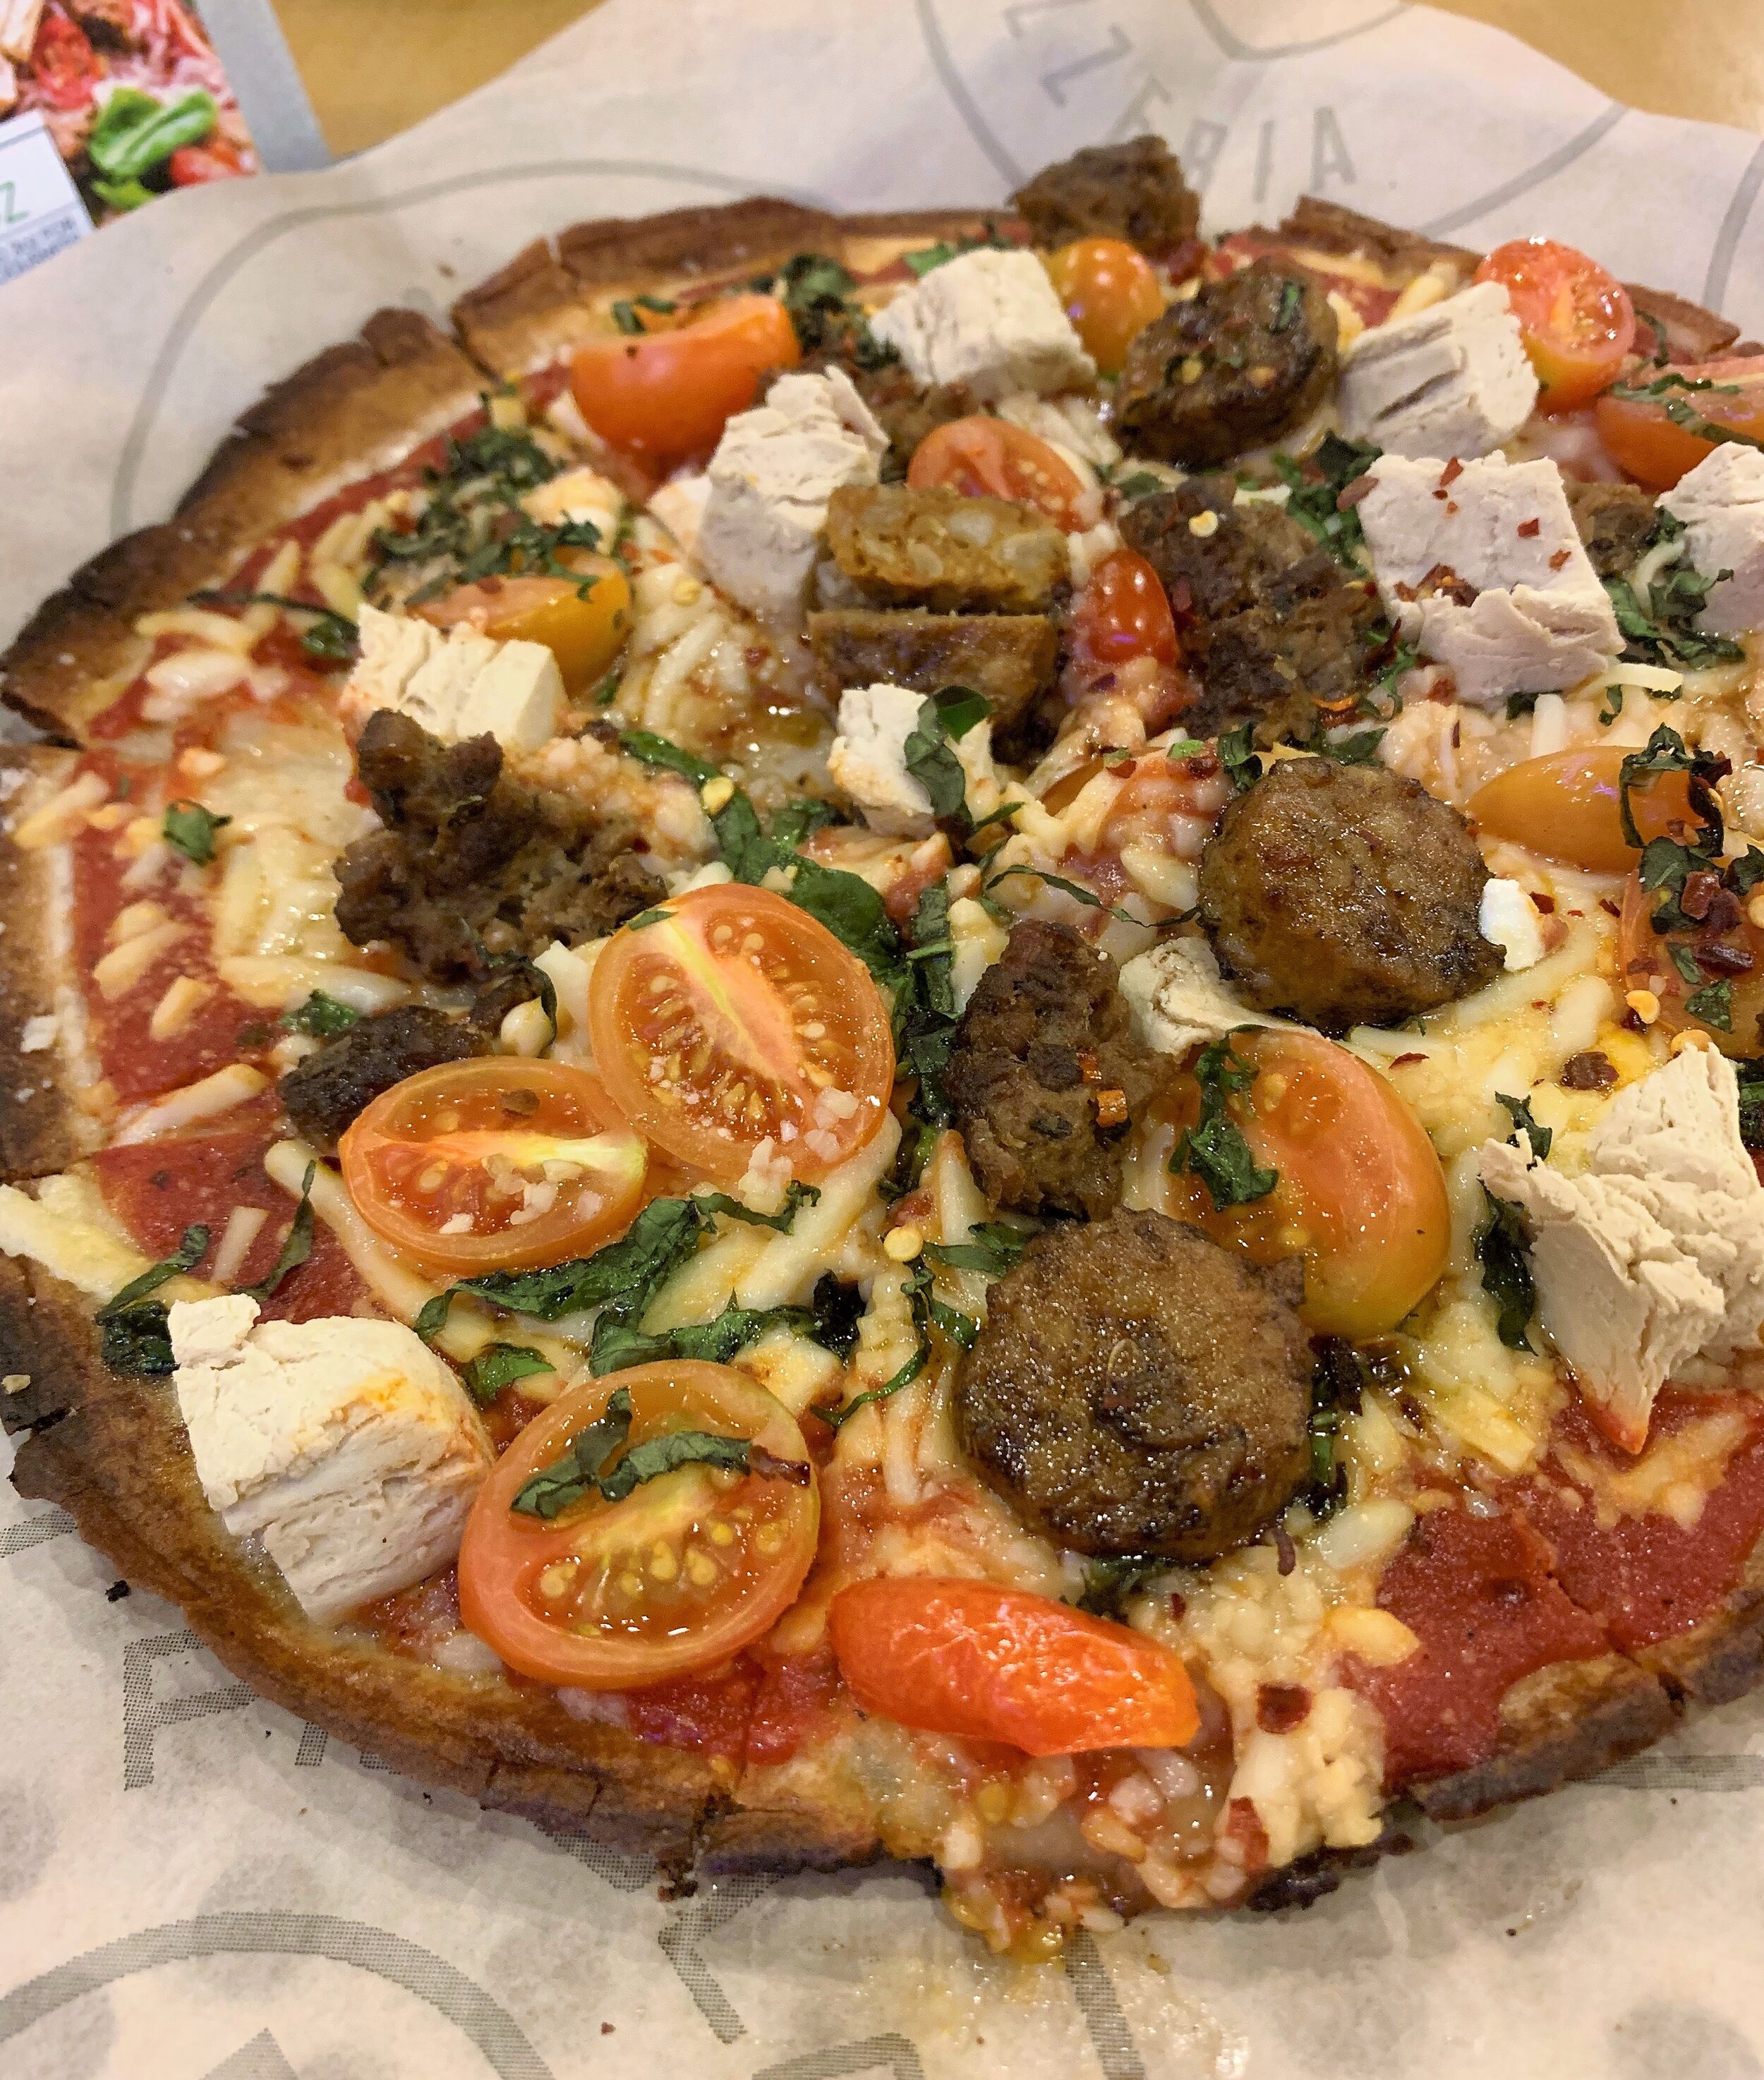 Pieology Pizzeria vegan and gluten free crust with Gardein vegan meats plus Daiya cheese